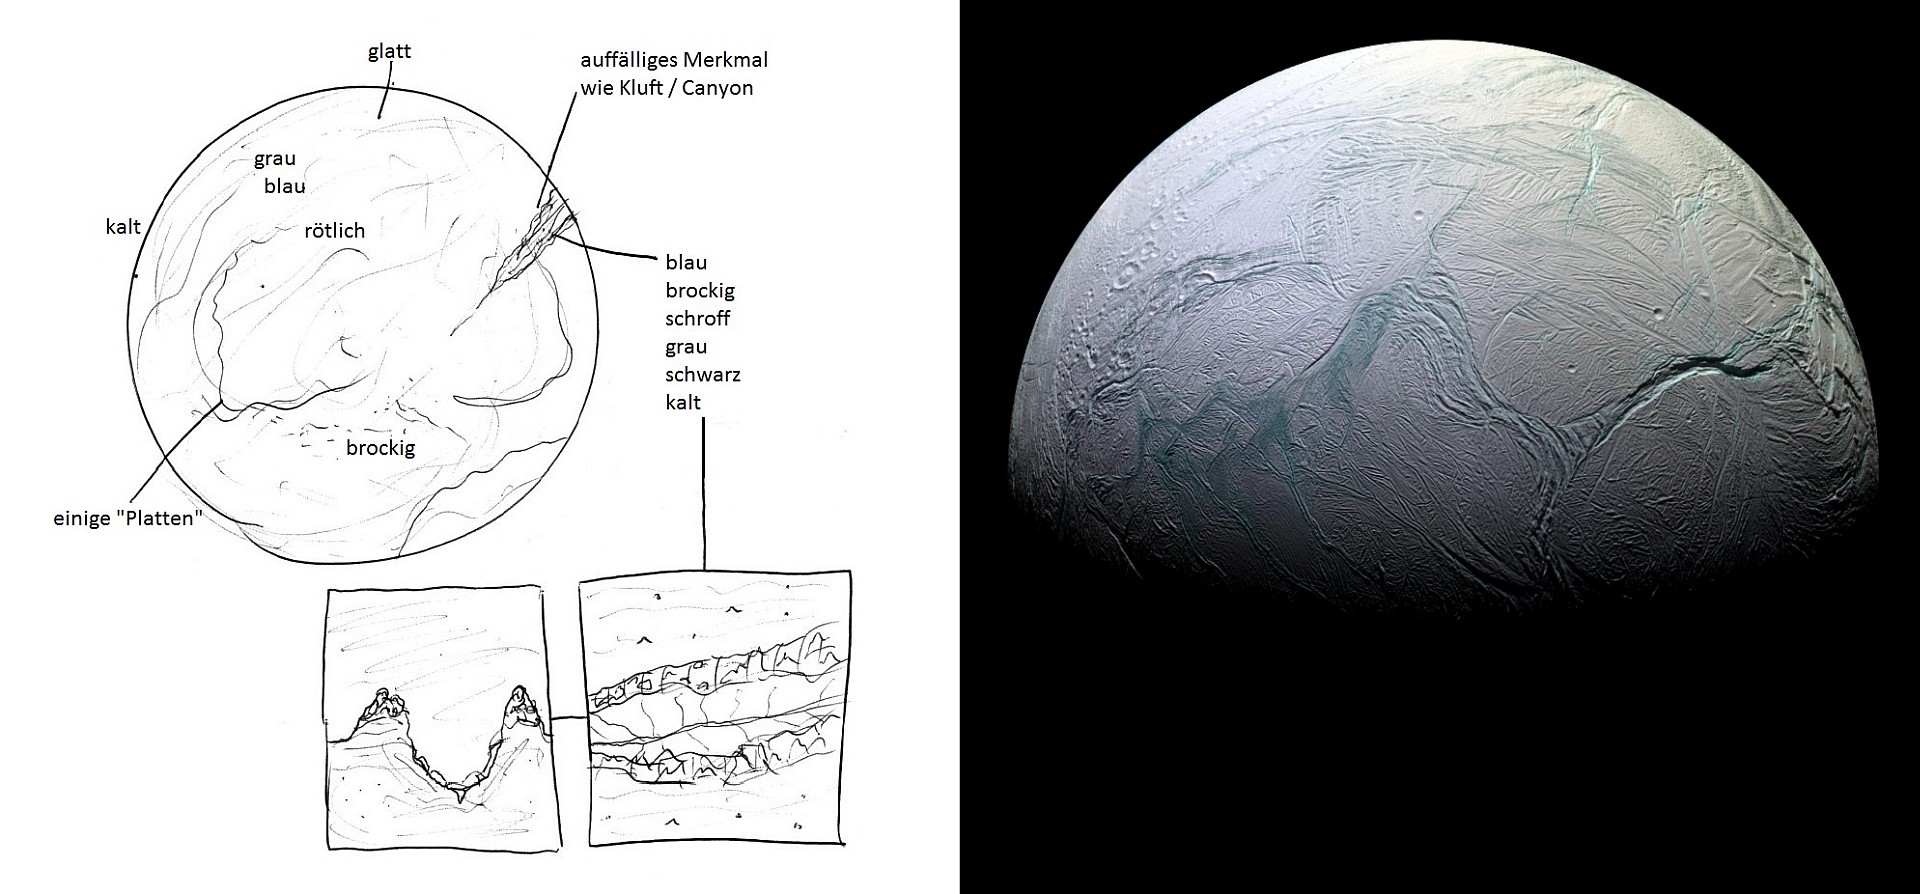 RV - Enceladus - OX - Vergleich